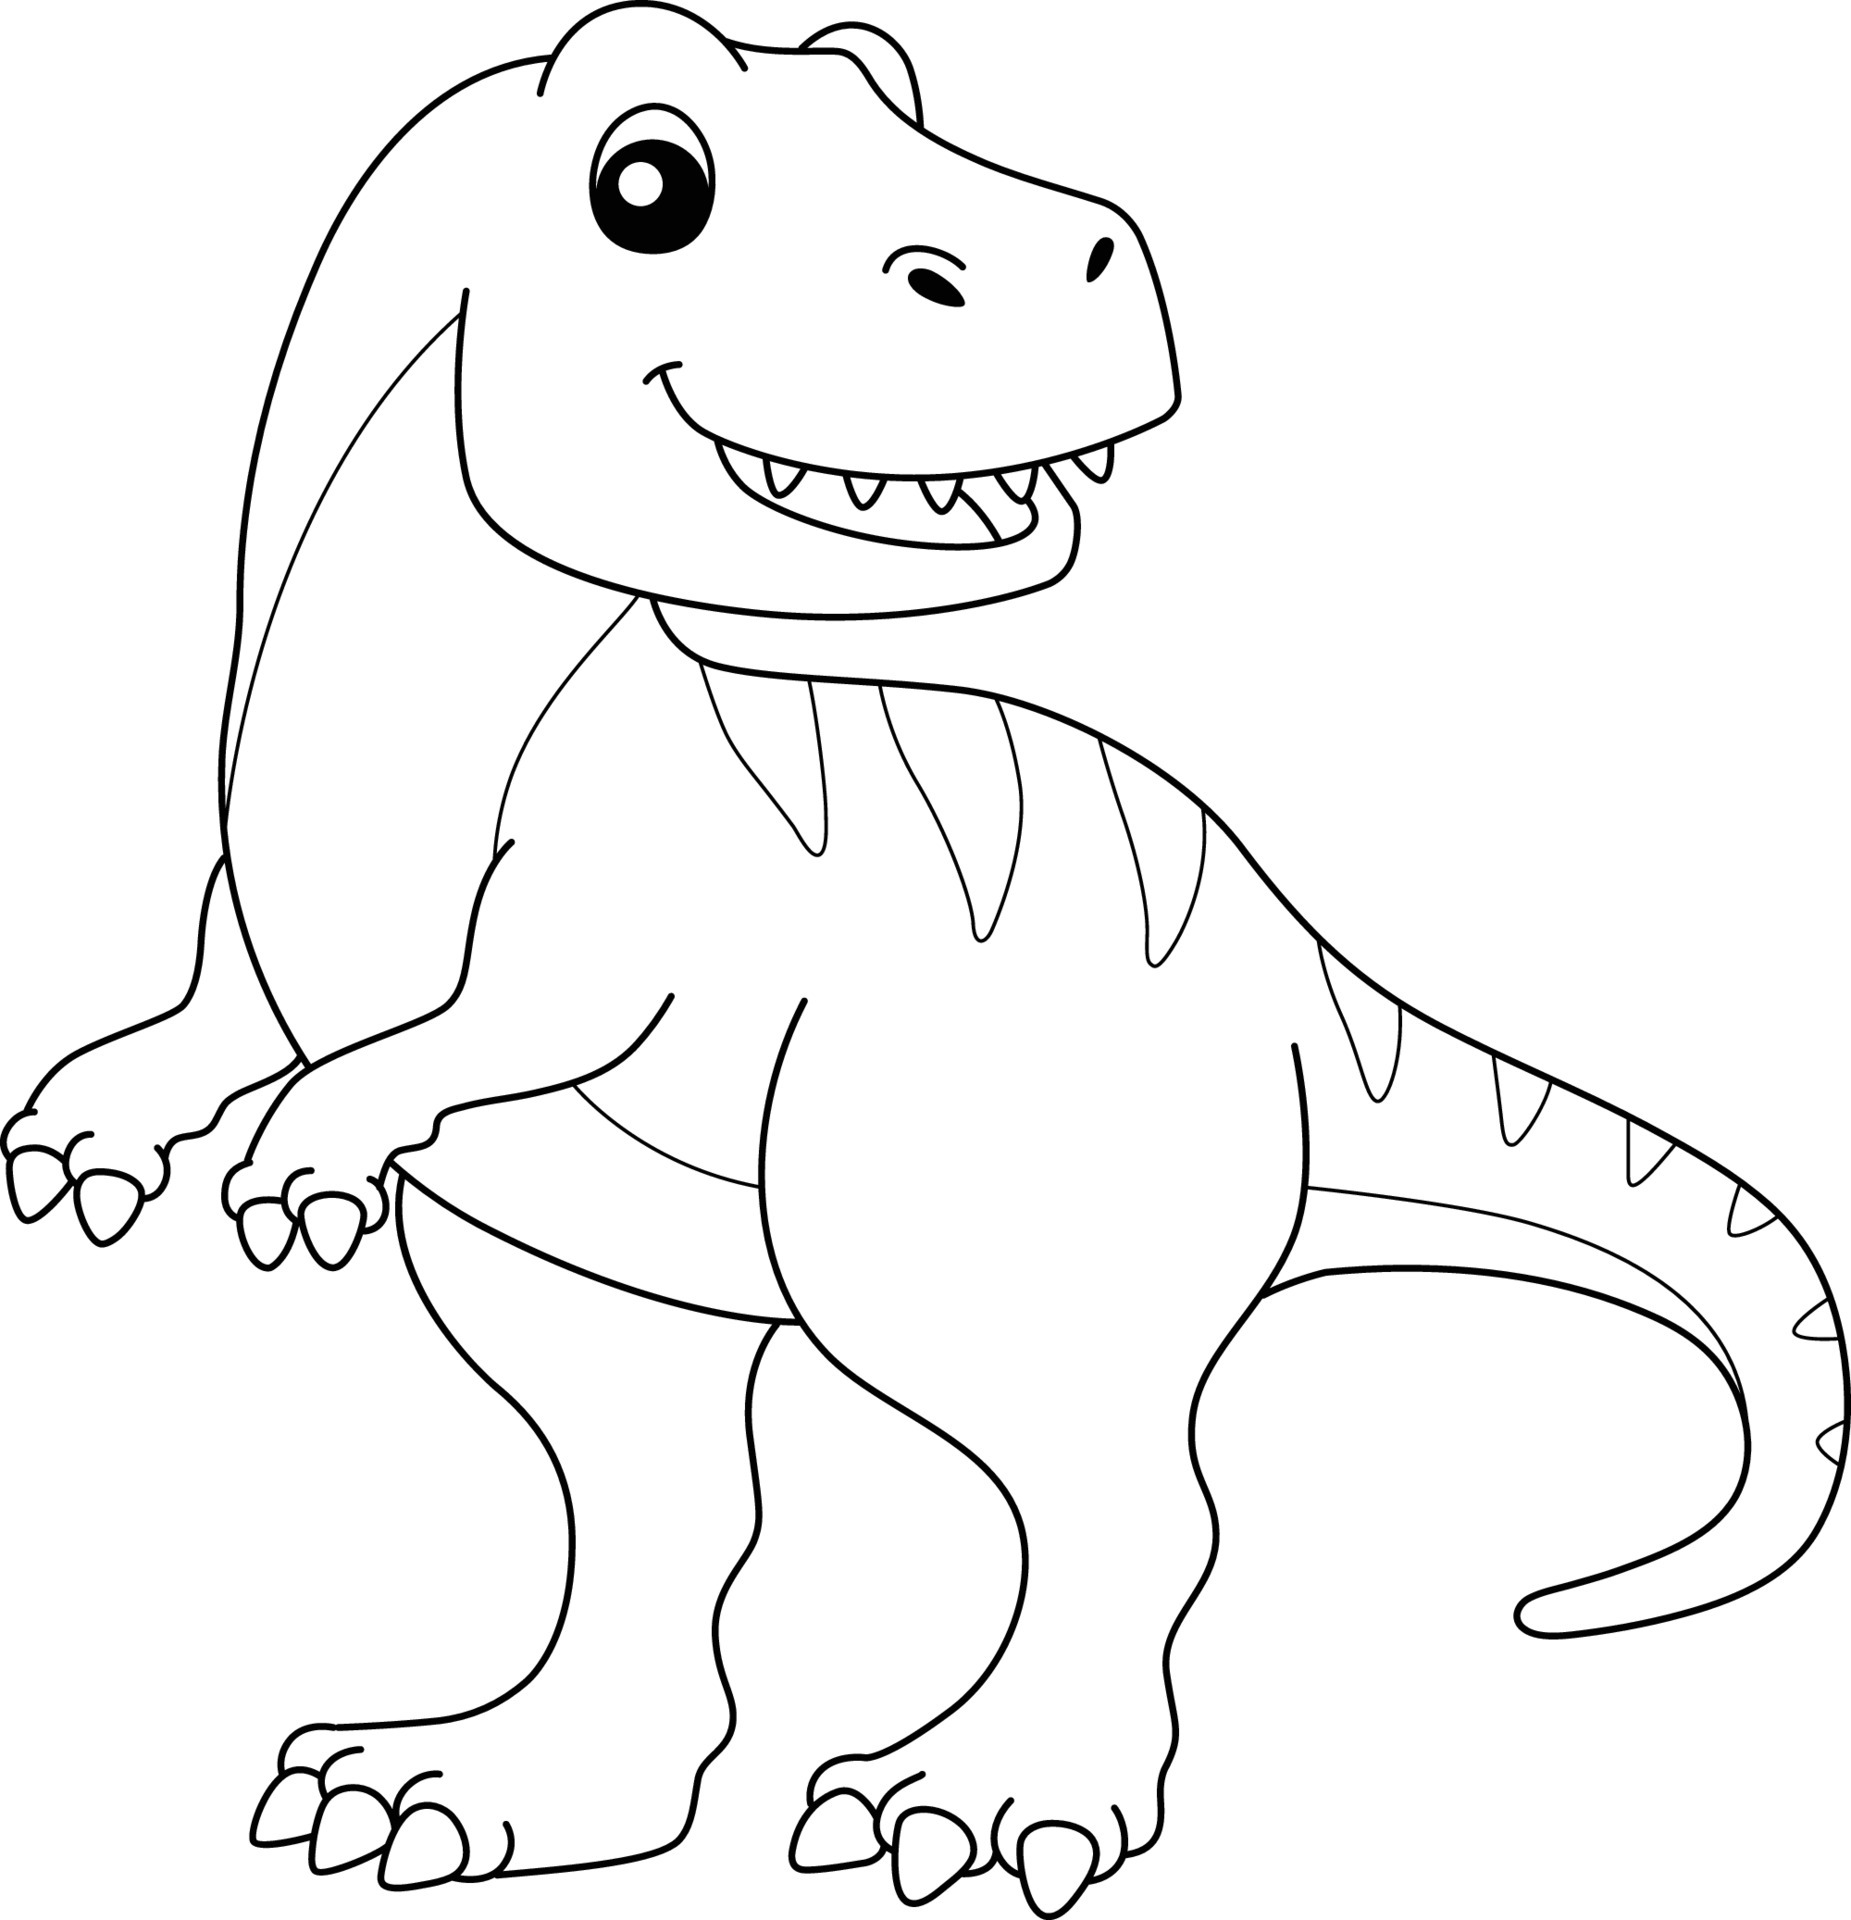 Free T Rex Dinosaur Coloring Page  Download in PDF Illustrator EPS SVG  JPG PNG  Templatenet